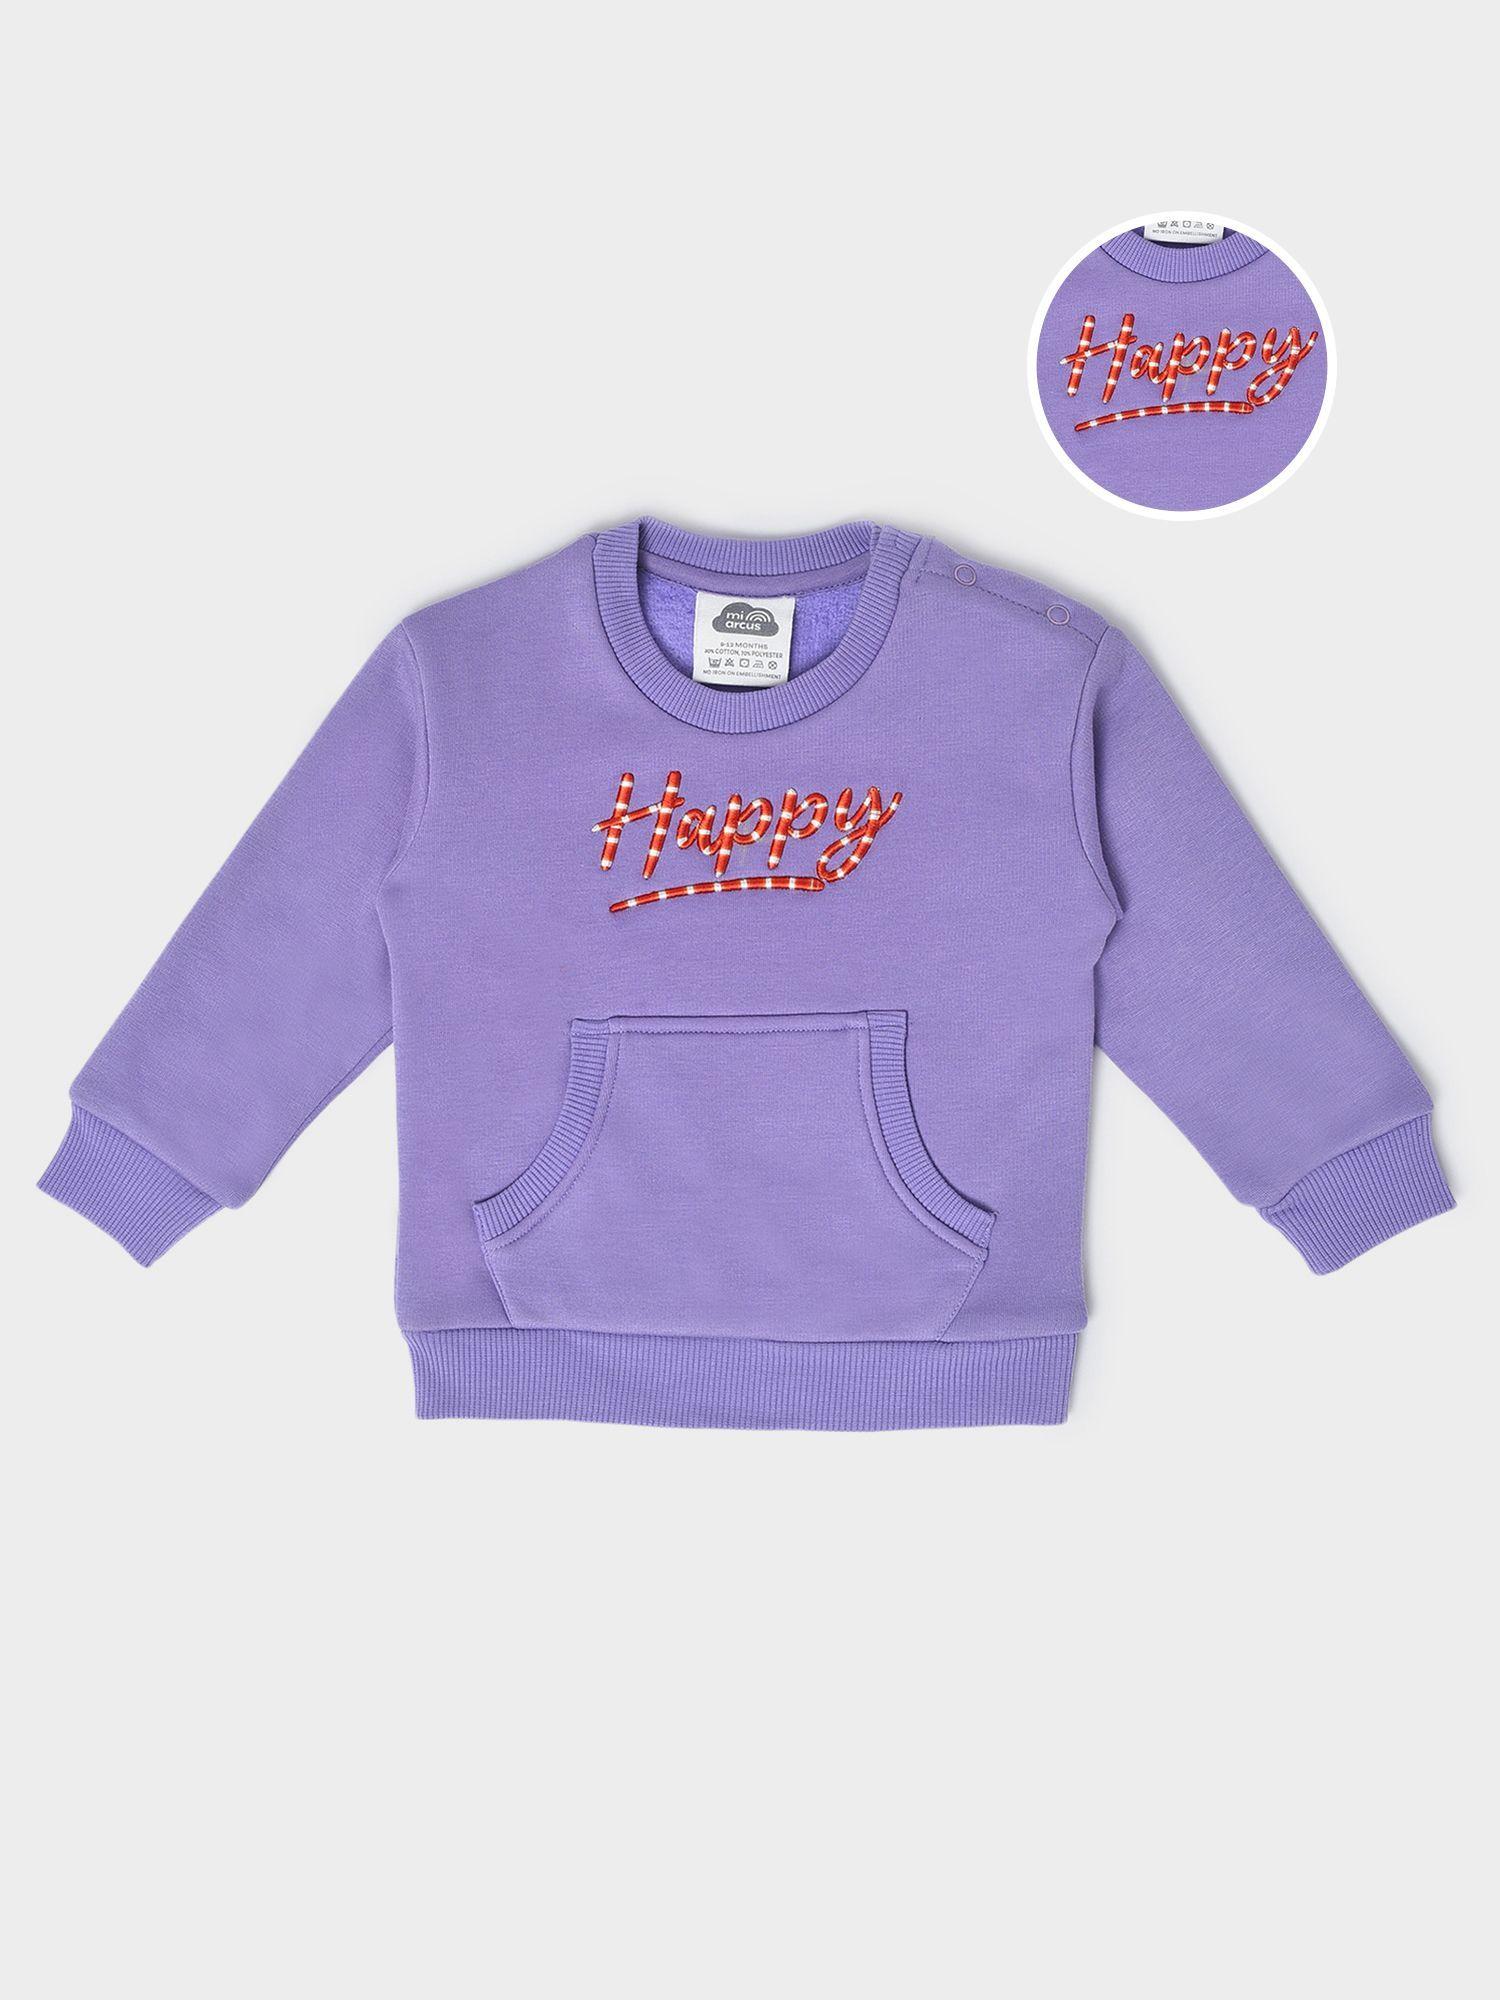 knitted purple sweatshirt with kangaroo pocket